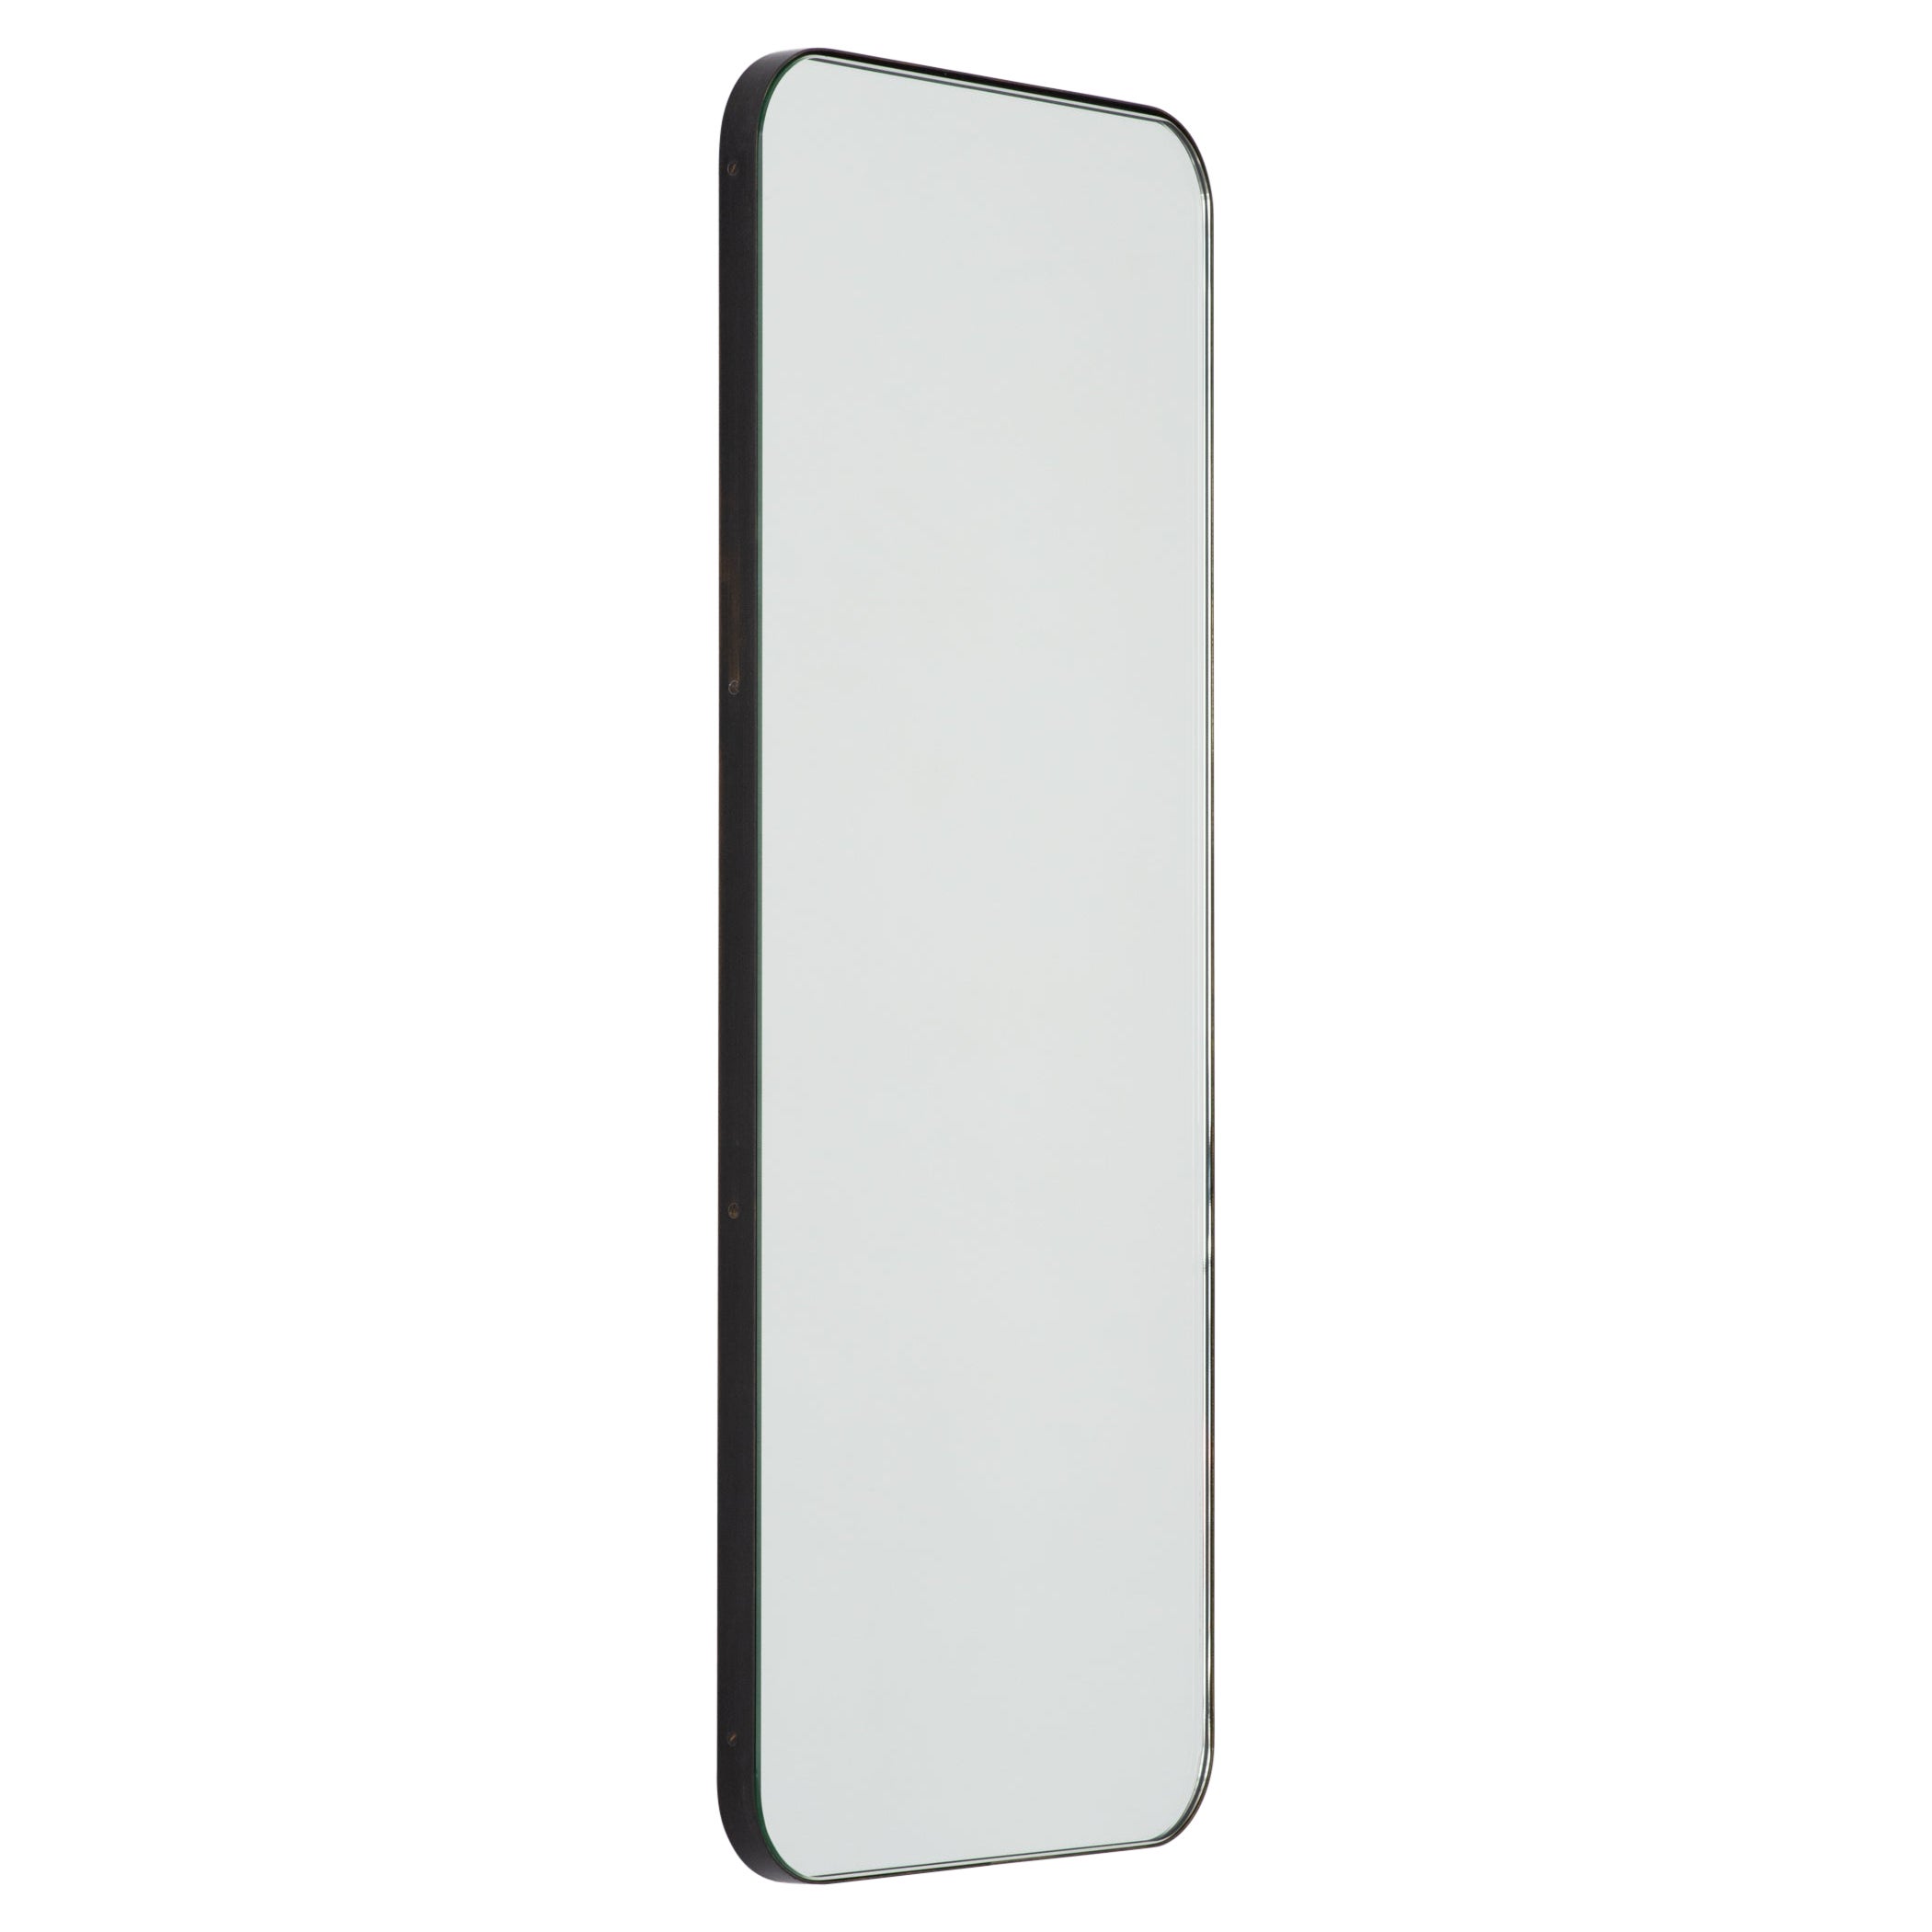 Quadris Rectangular Minimalist Mirror with a Black Frame, Small For Sale